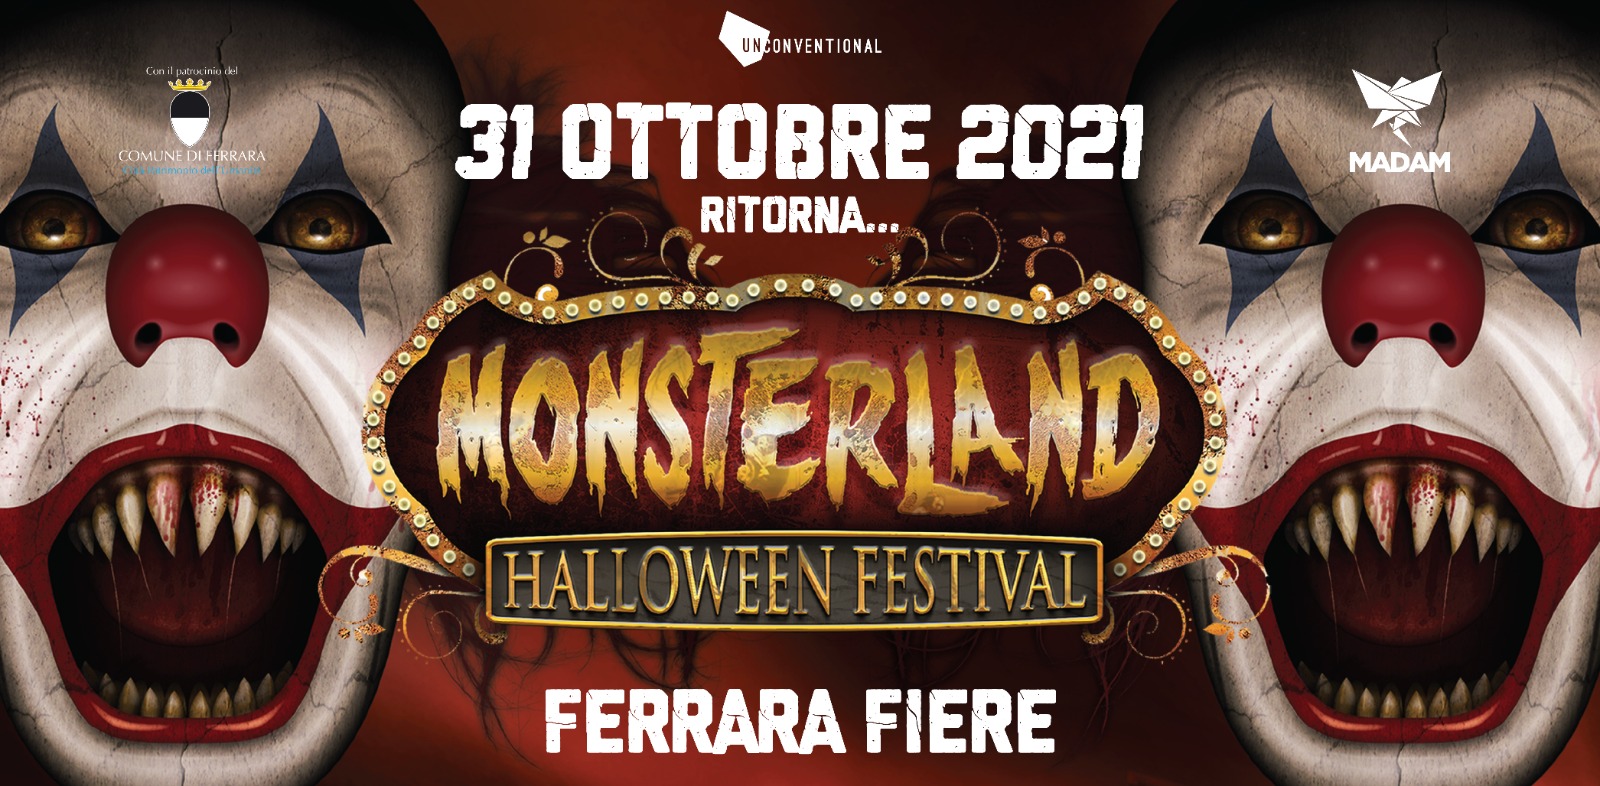 monsterland halloween festiva 2021 ferrara fiere